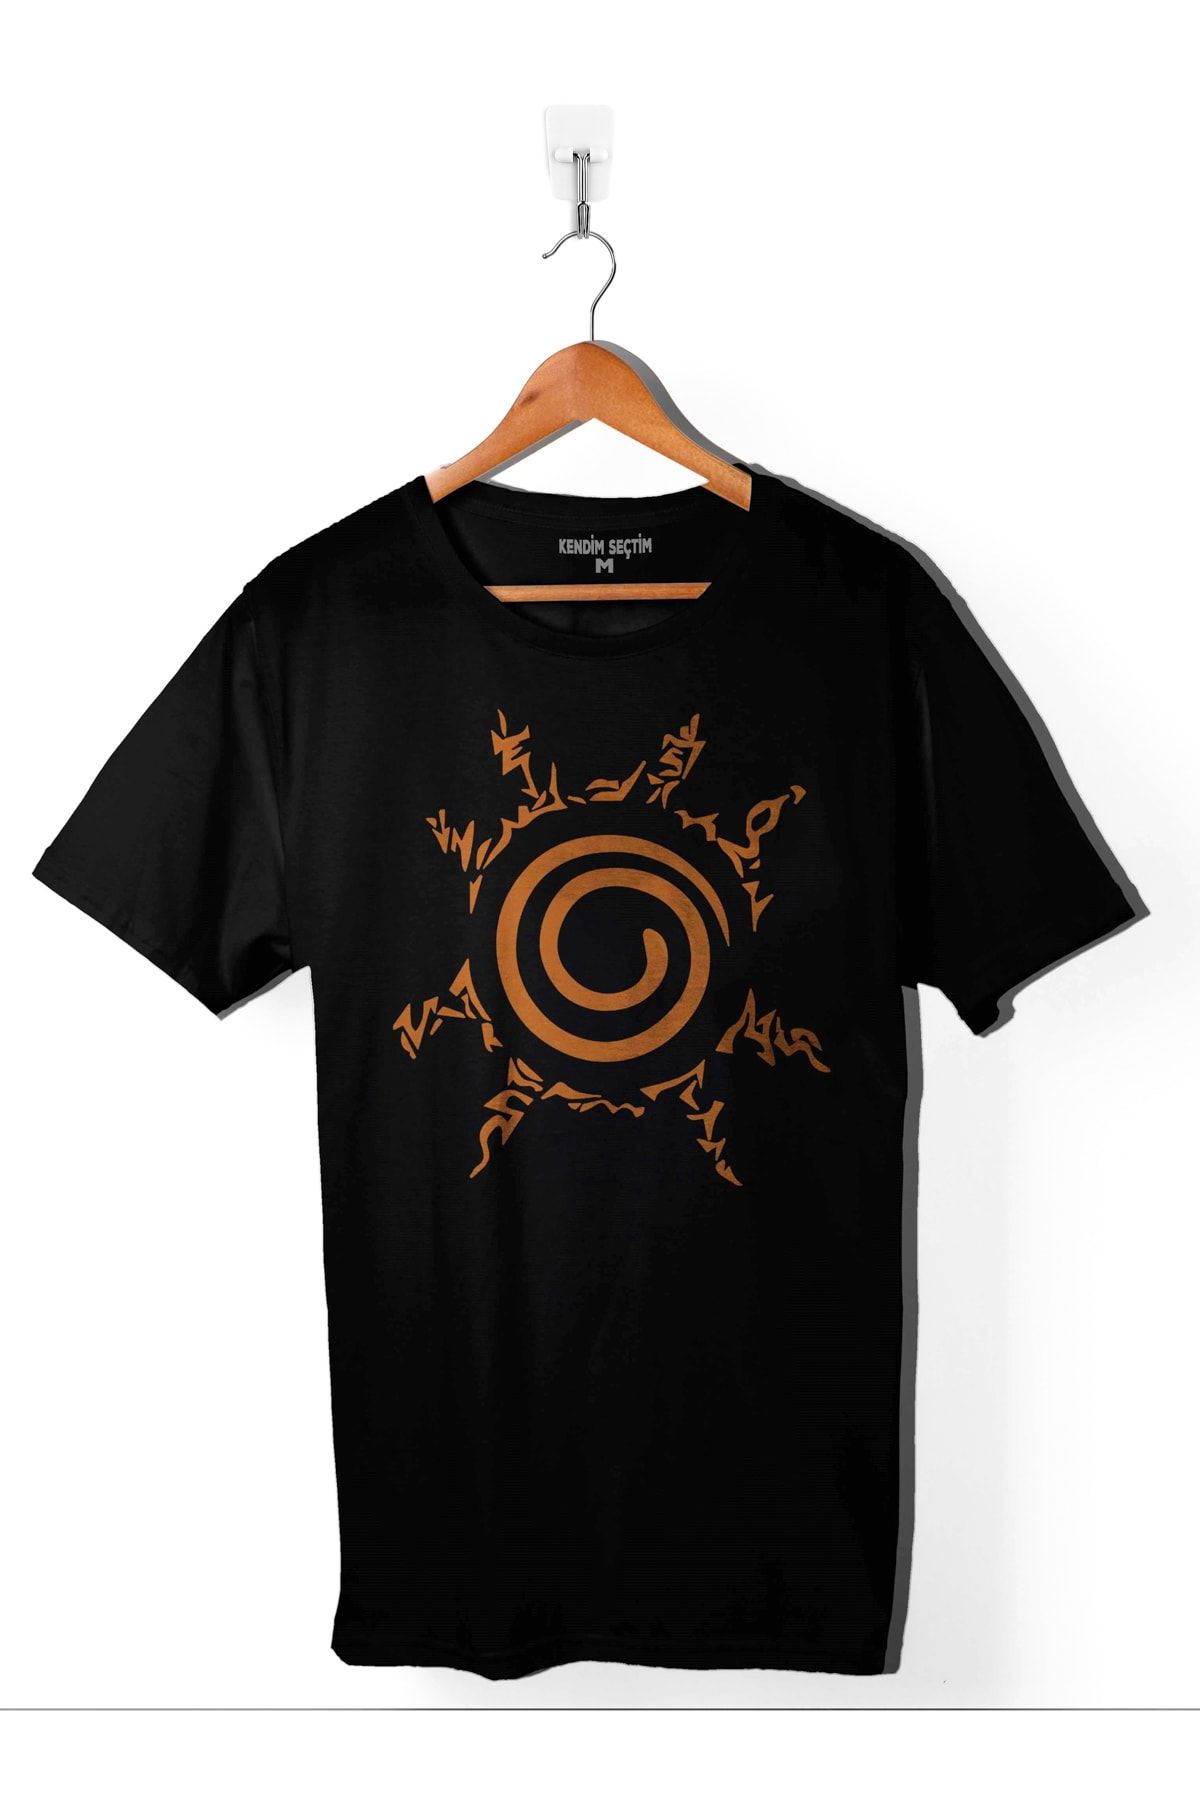 Kendim Seçtim Kyuubı Seal Of Naruto Jınchuurıkı Logo Erkek Tişört